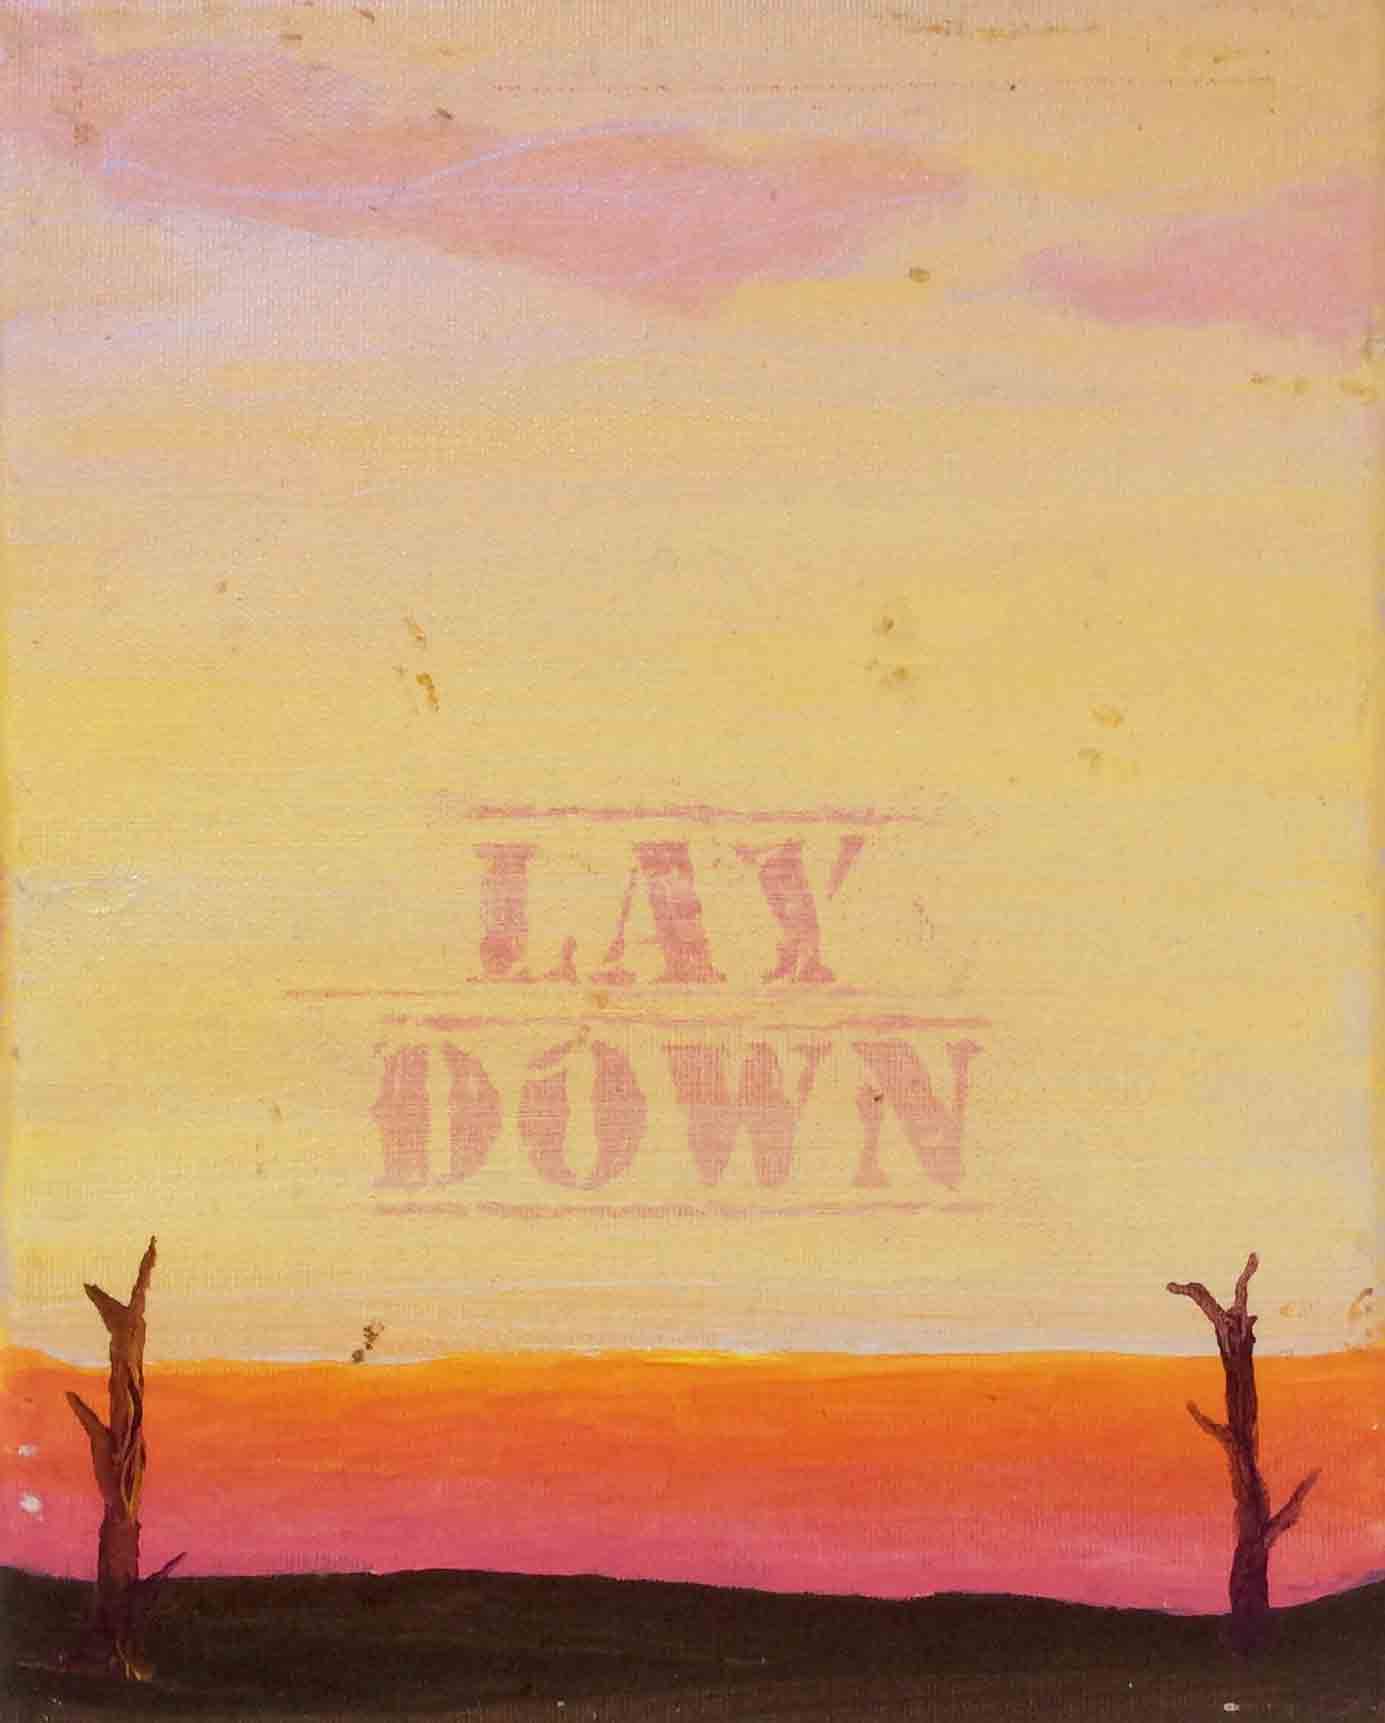 Lay down